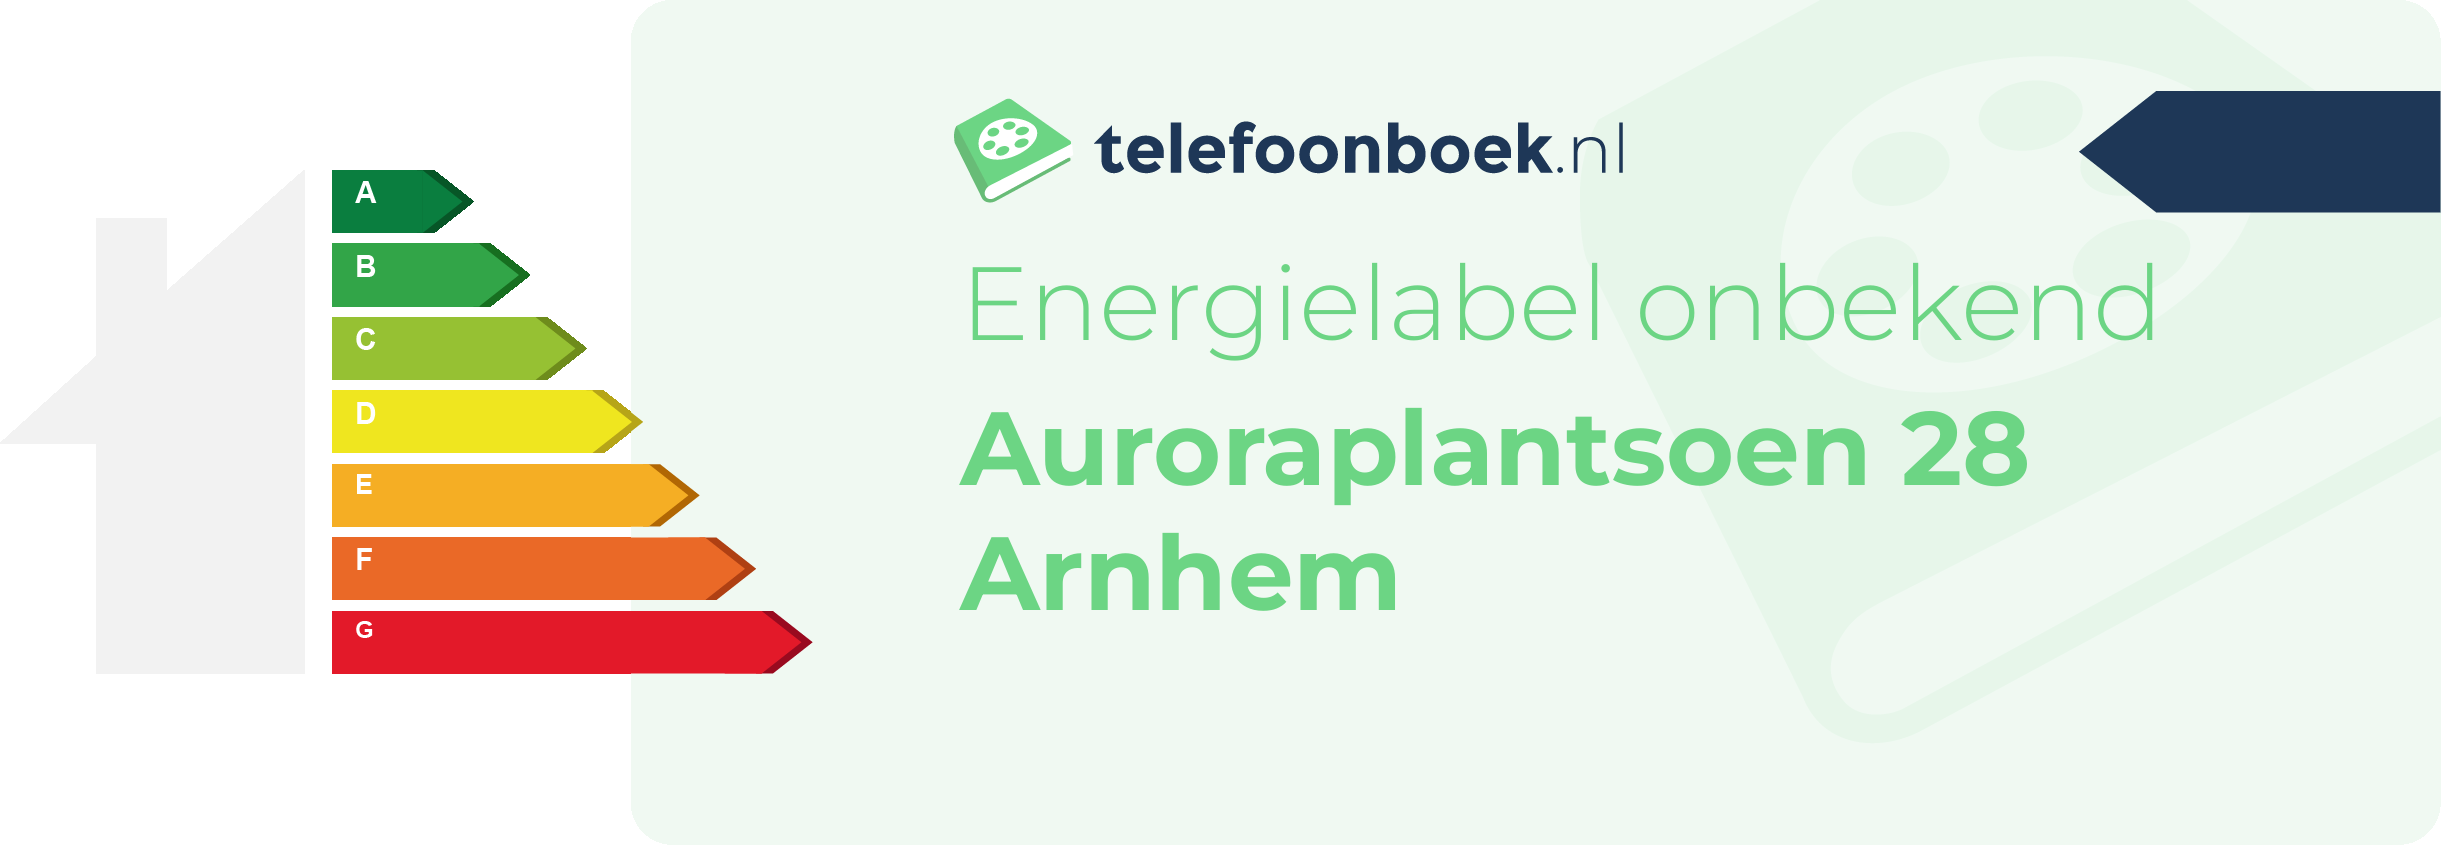 Energielabel Auroraplantsoen 28 Arnhem